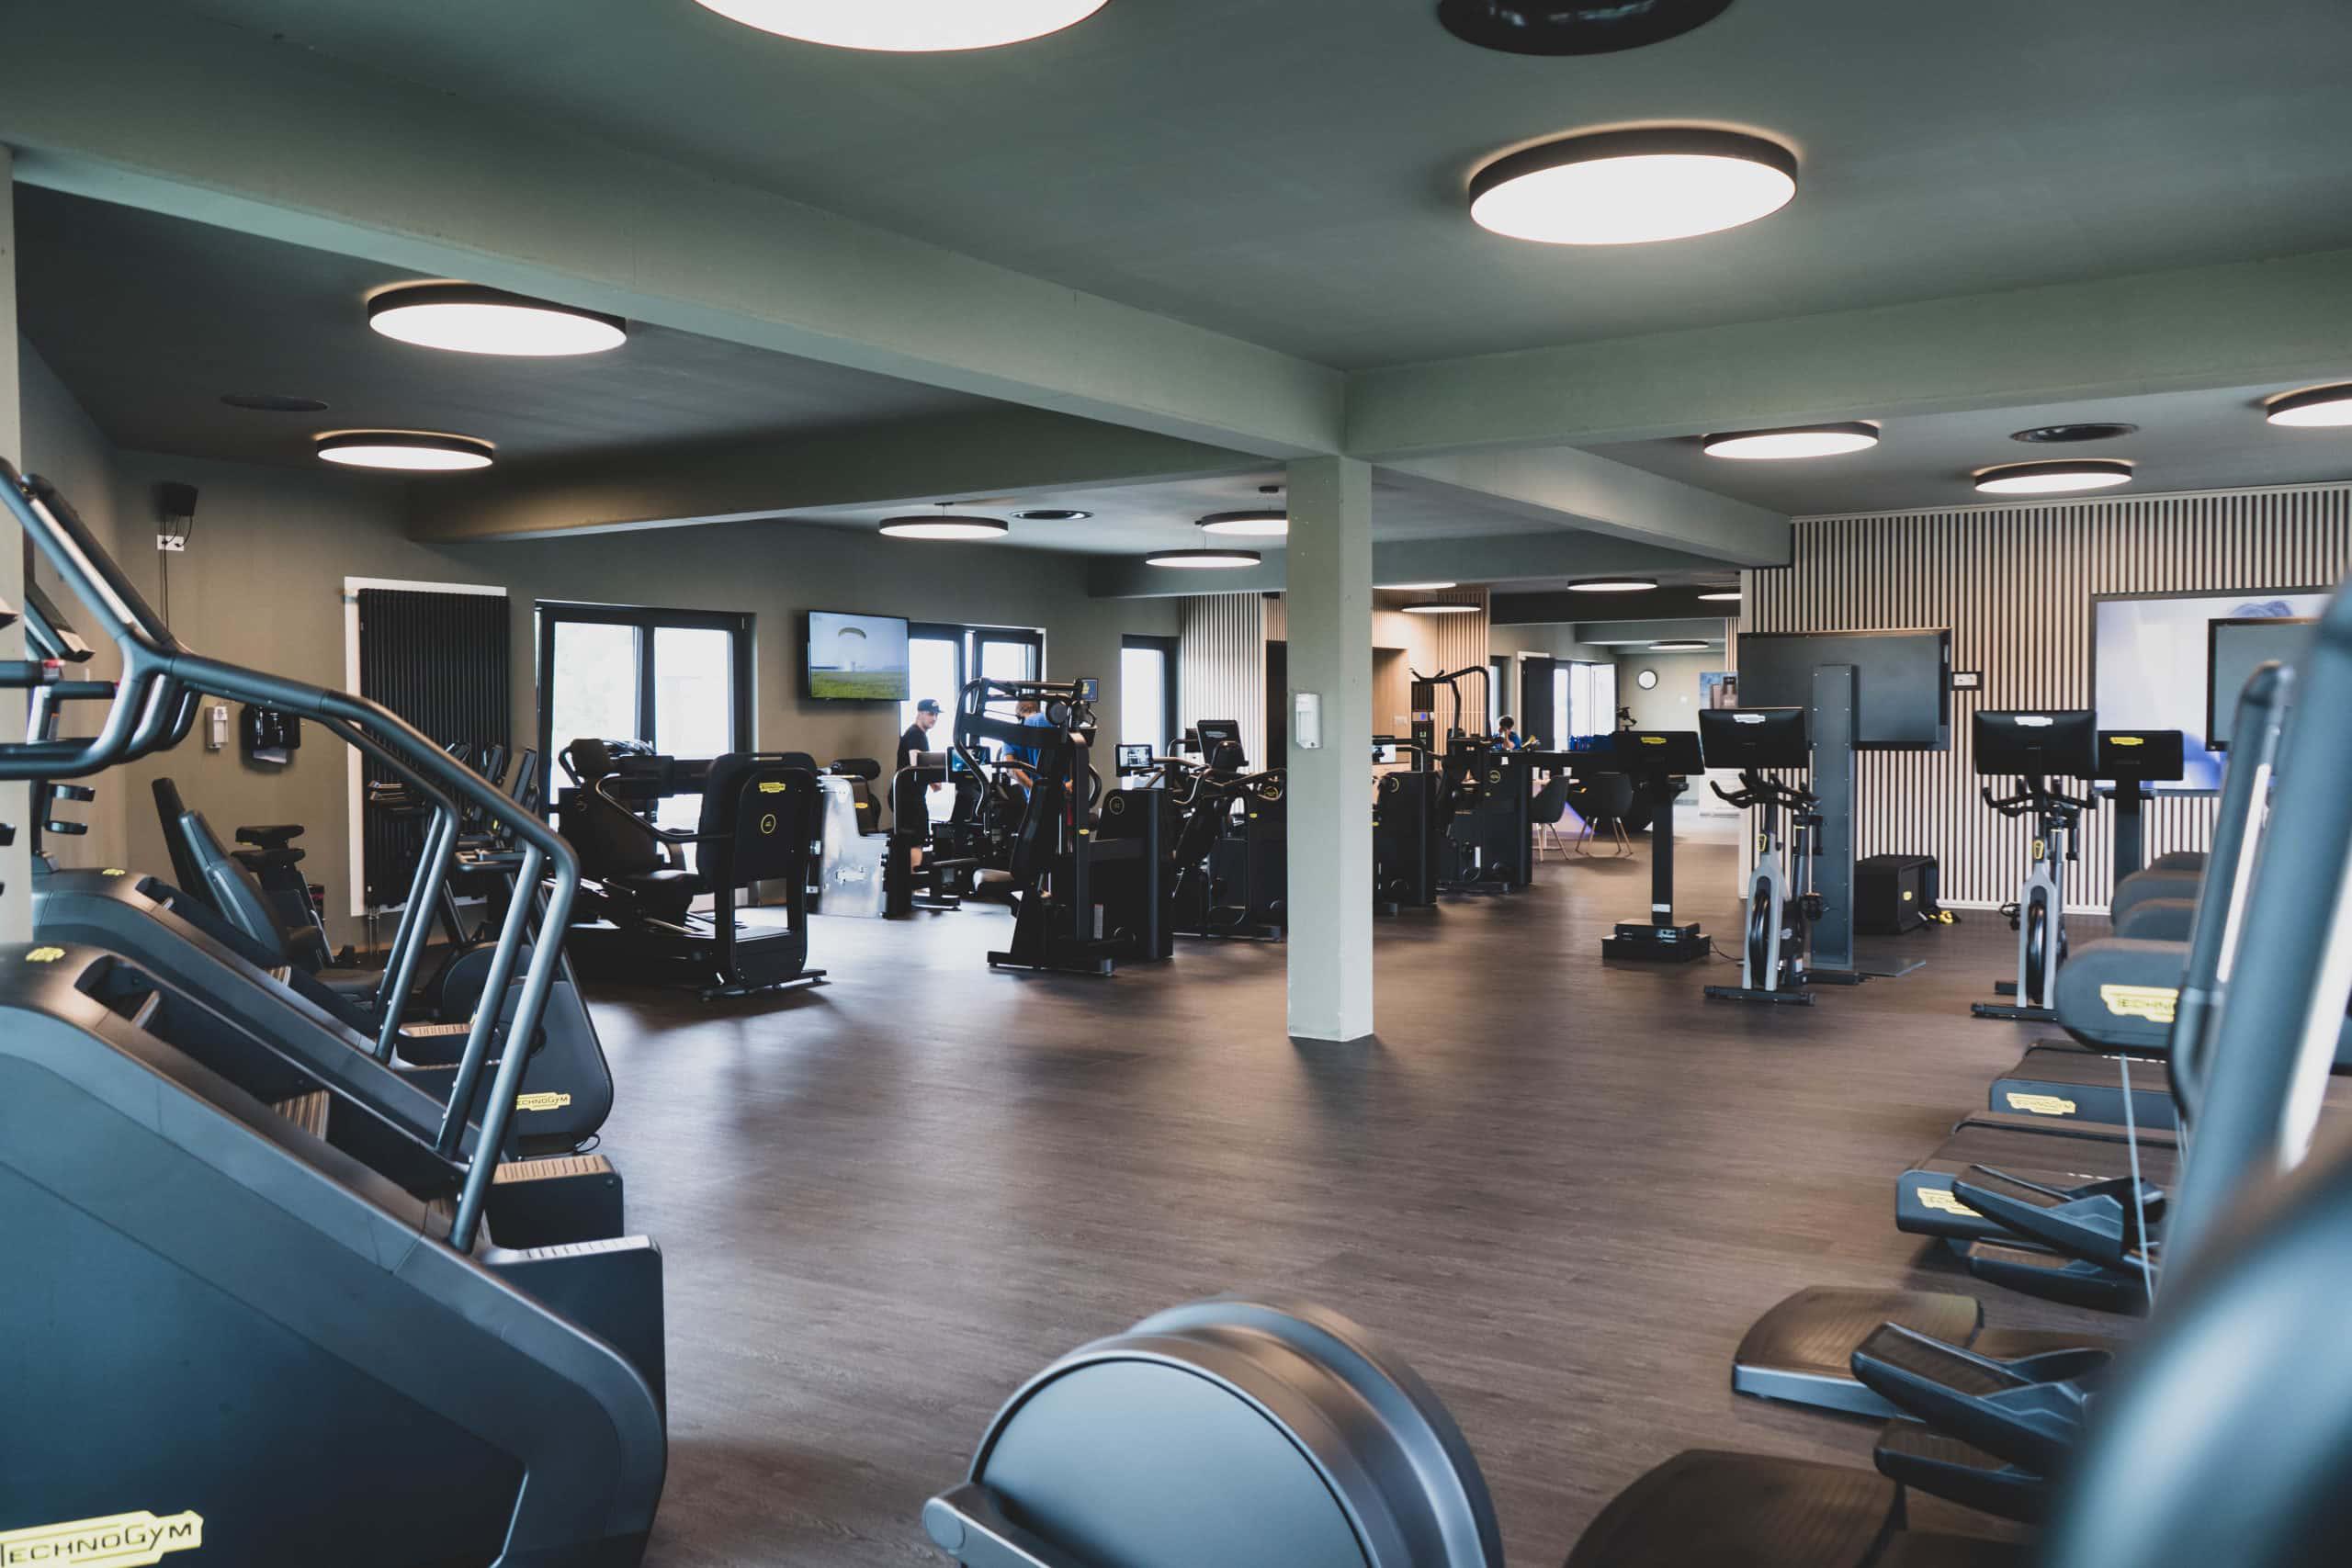 clever fit NEXT Fitnessstudio | Krafttraining, Fitnesskurse, Personal Training, Gewerbestraße 5 in Straßlach-Dingharting